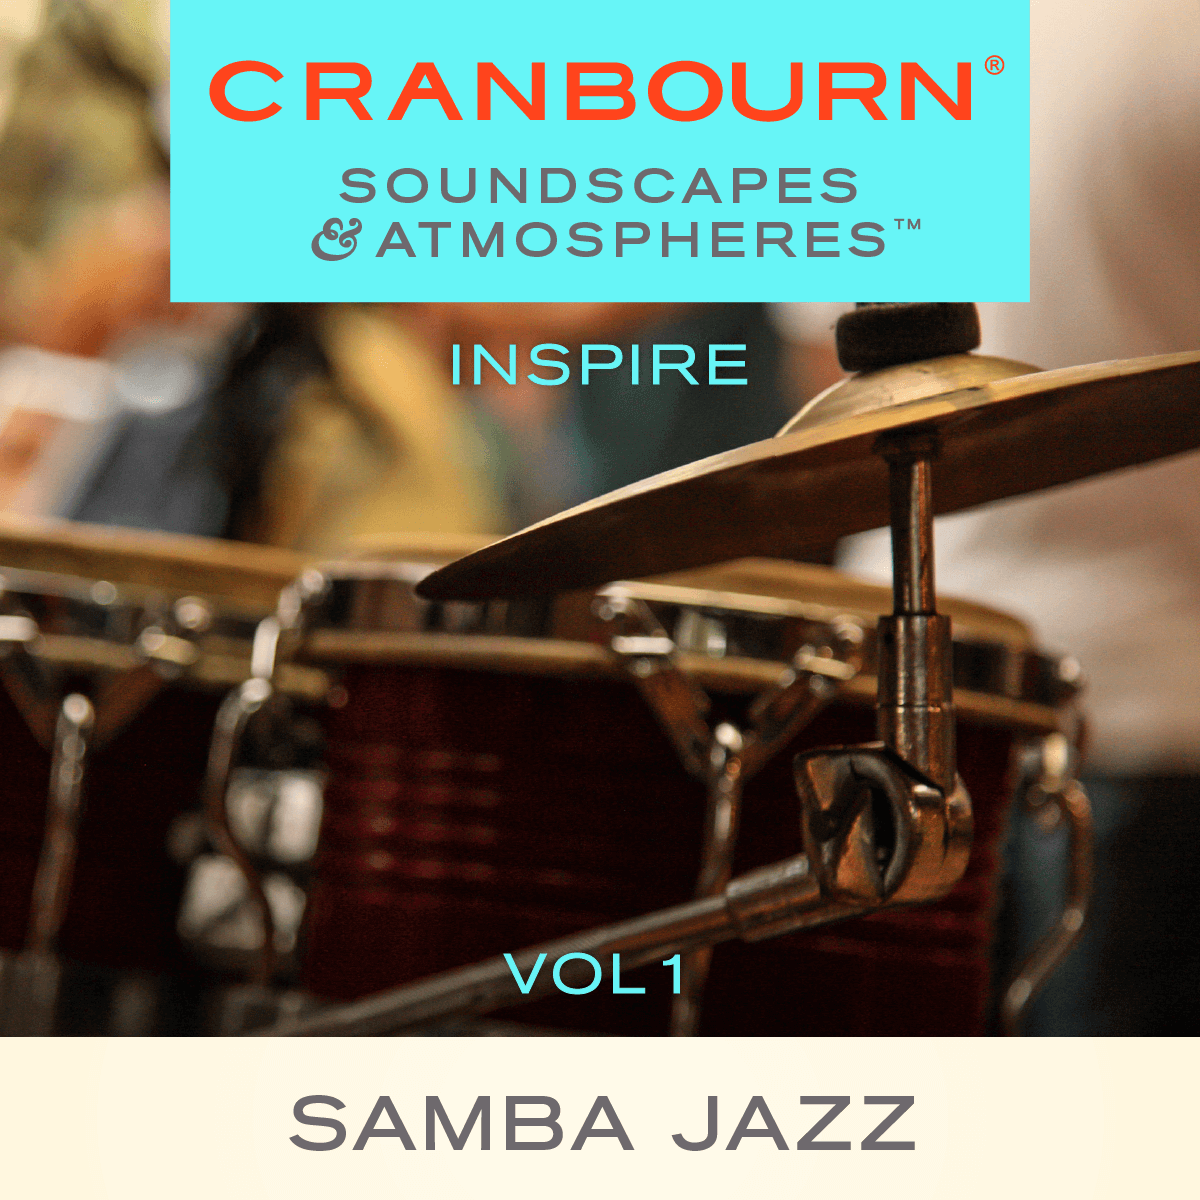 Samba-jazz